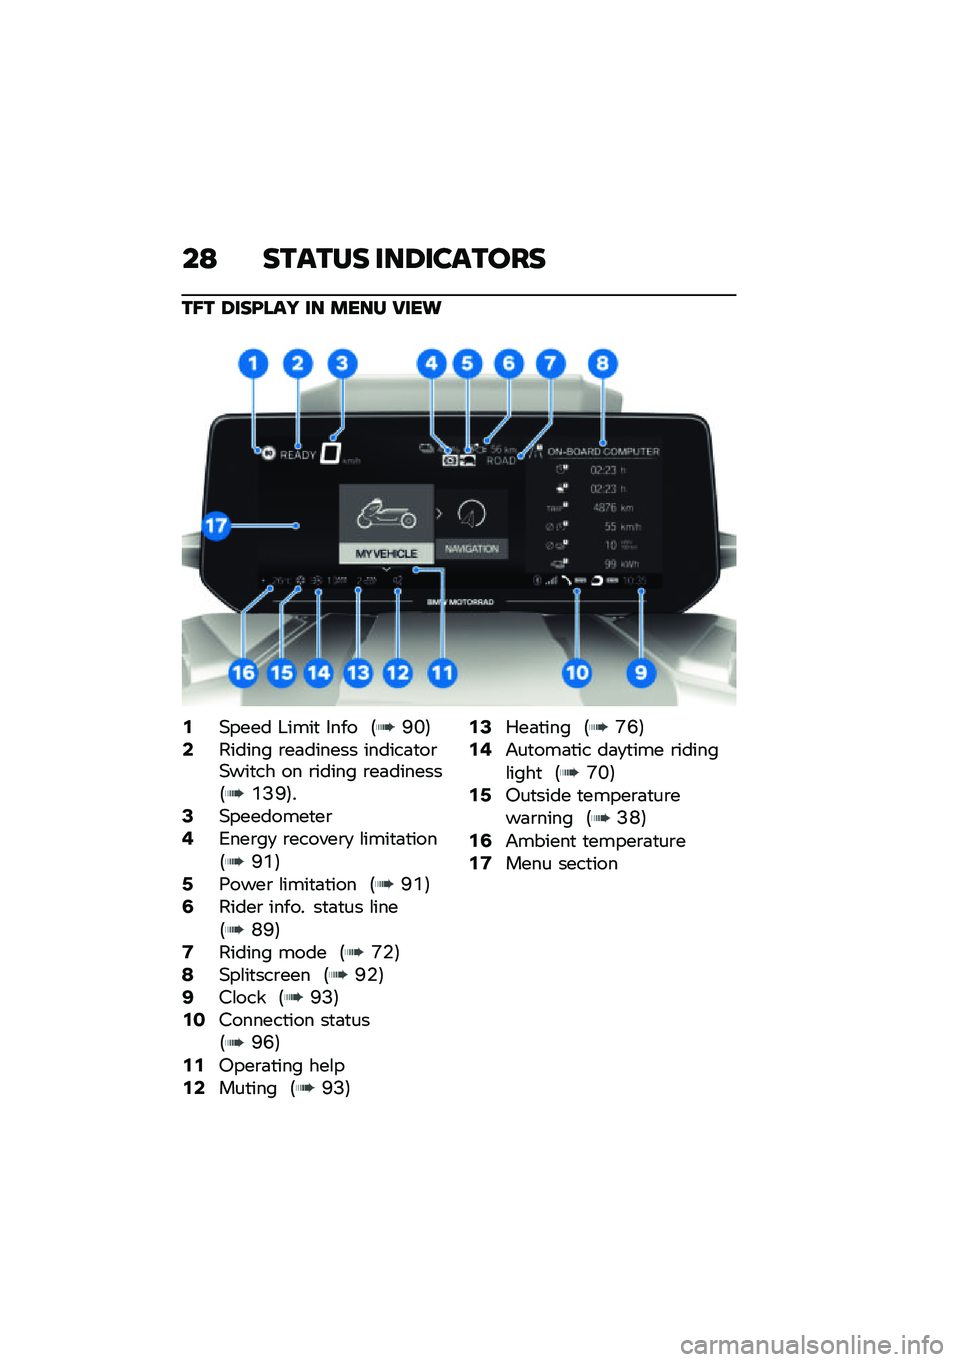 BMW MOTORRAD CE 04 2021  Riders Manual (in English) ��= ������ ���9�������
��C� �9���D��� �� ���� �:���\b
�-�)���� �.����
 ���� �7�F�K�8�/������ �\b��	������ ������	�
��\b�)���
�� �� �\